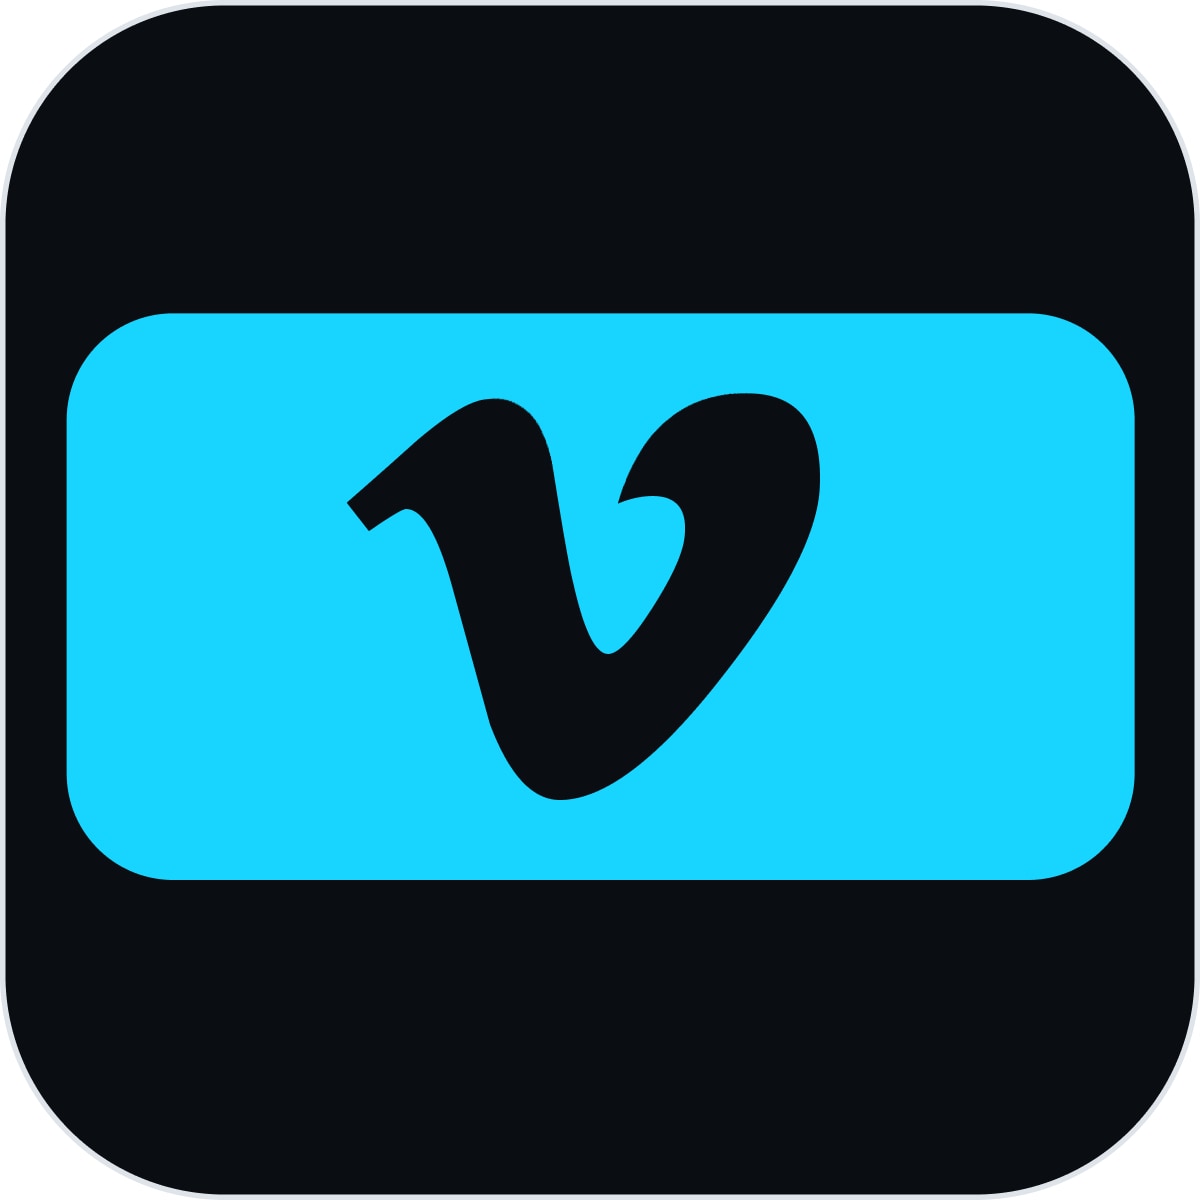 Vimeo Enterprise - license - 1 additional registered viewer seat